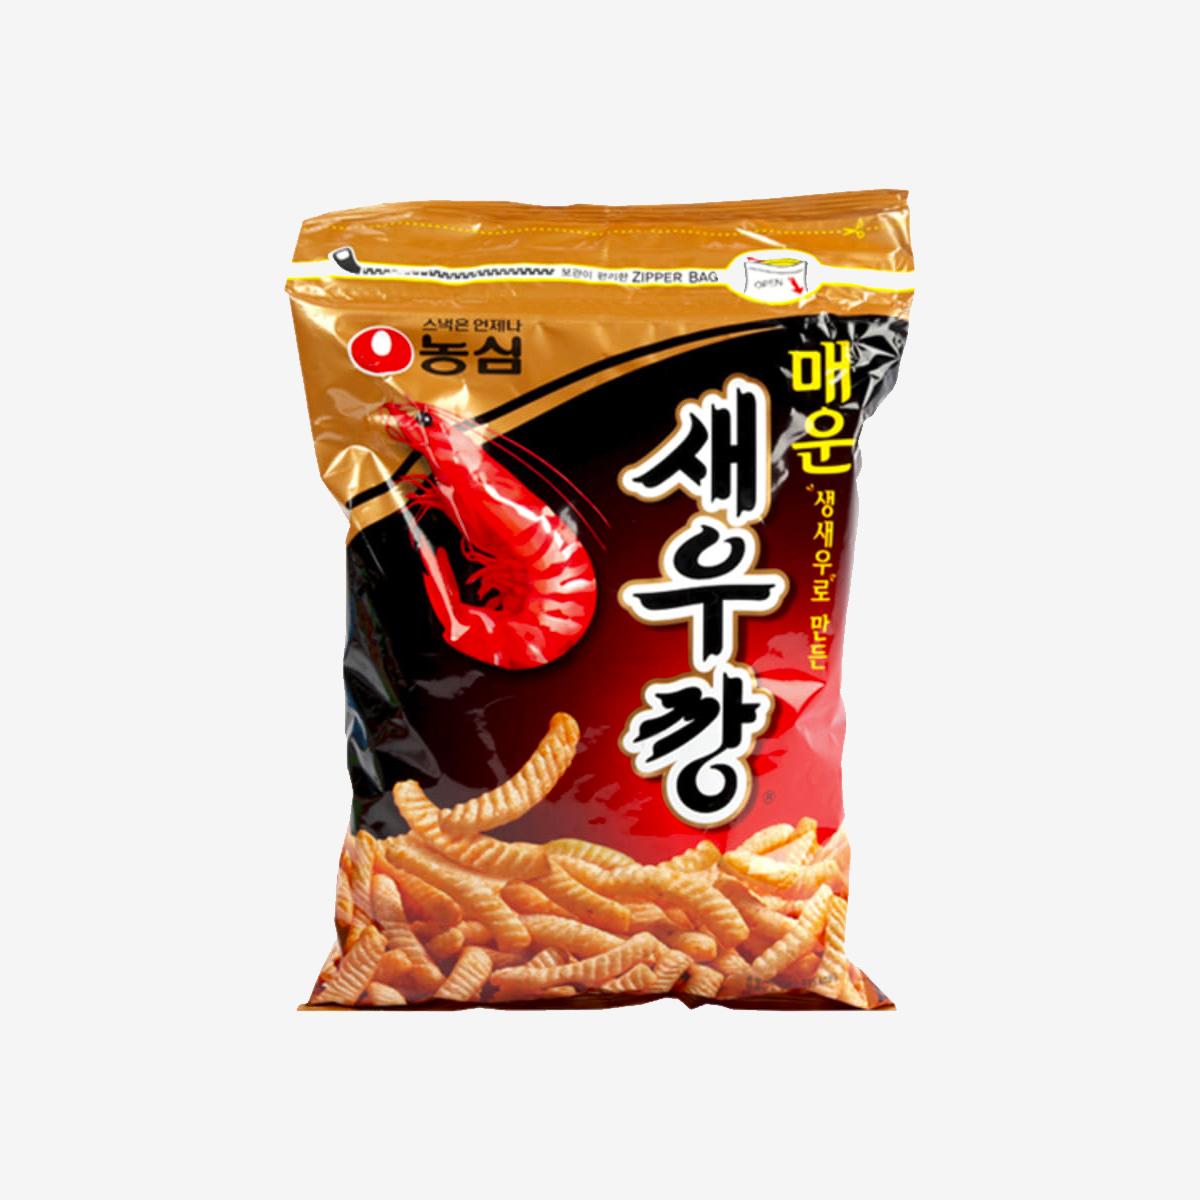 korean brand nongshim's spicy shrimp crackers bag